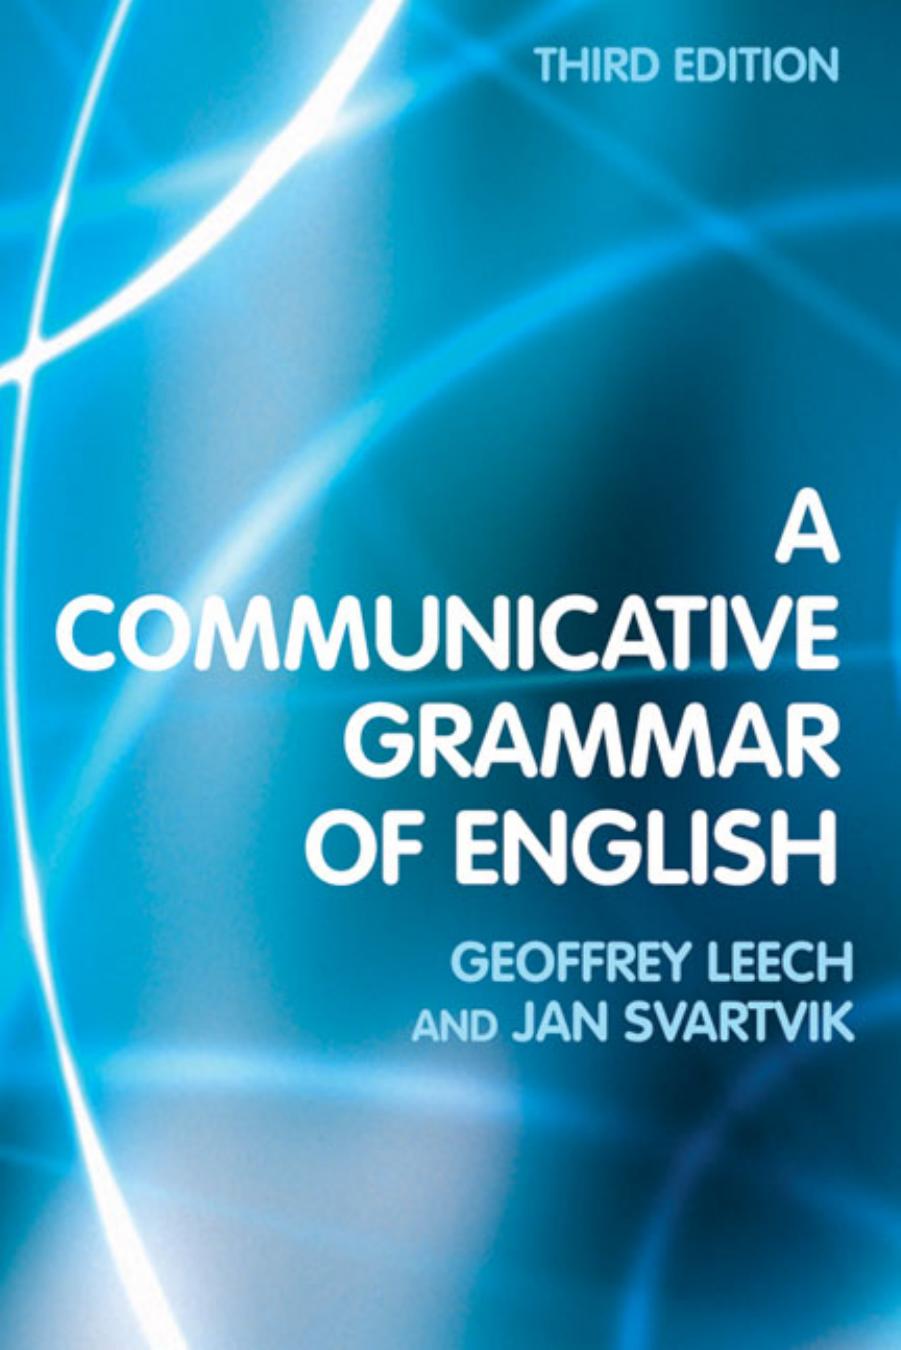 A Communicative Grammar of English-Third Edition